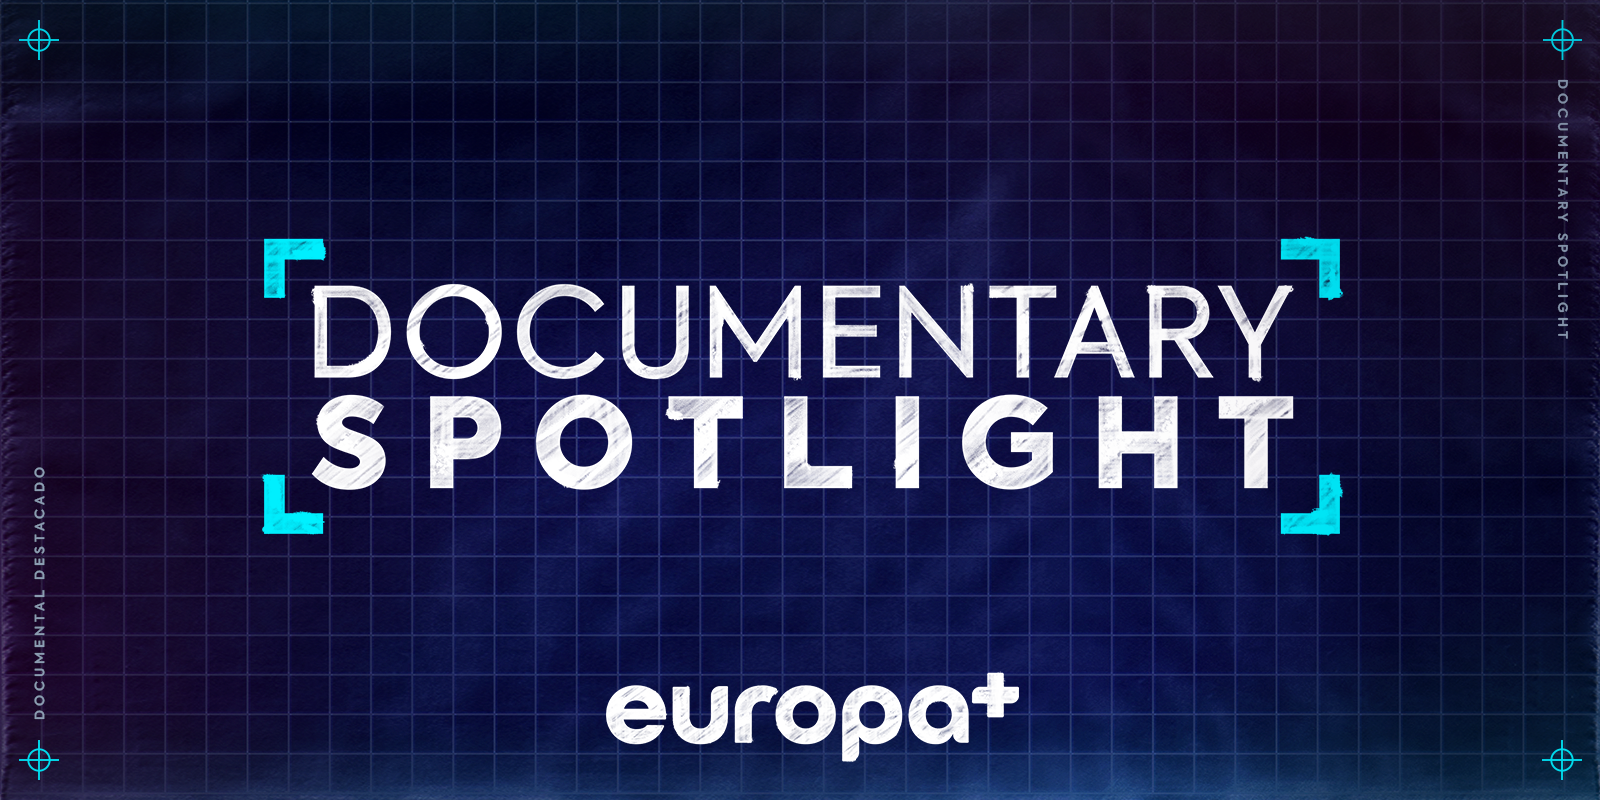 Póster de Documentary Spotlight en Europa+